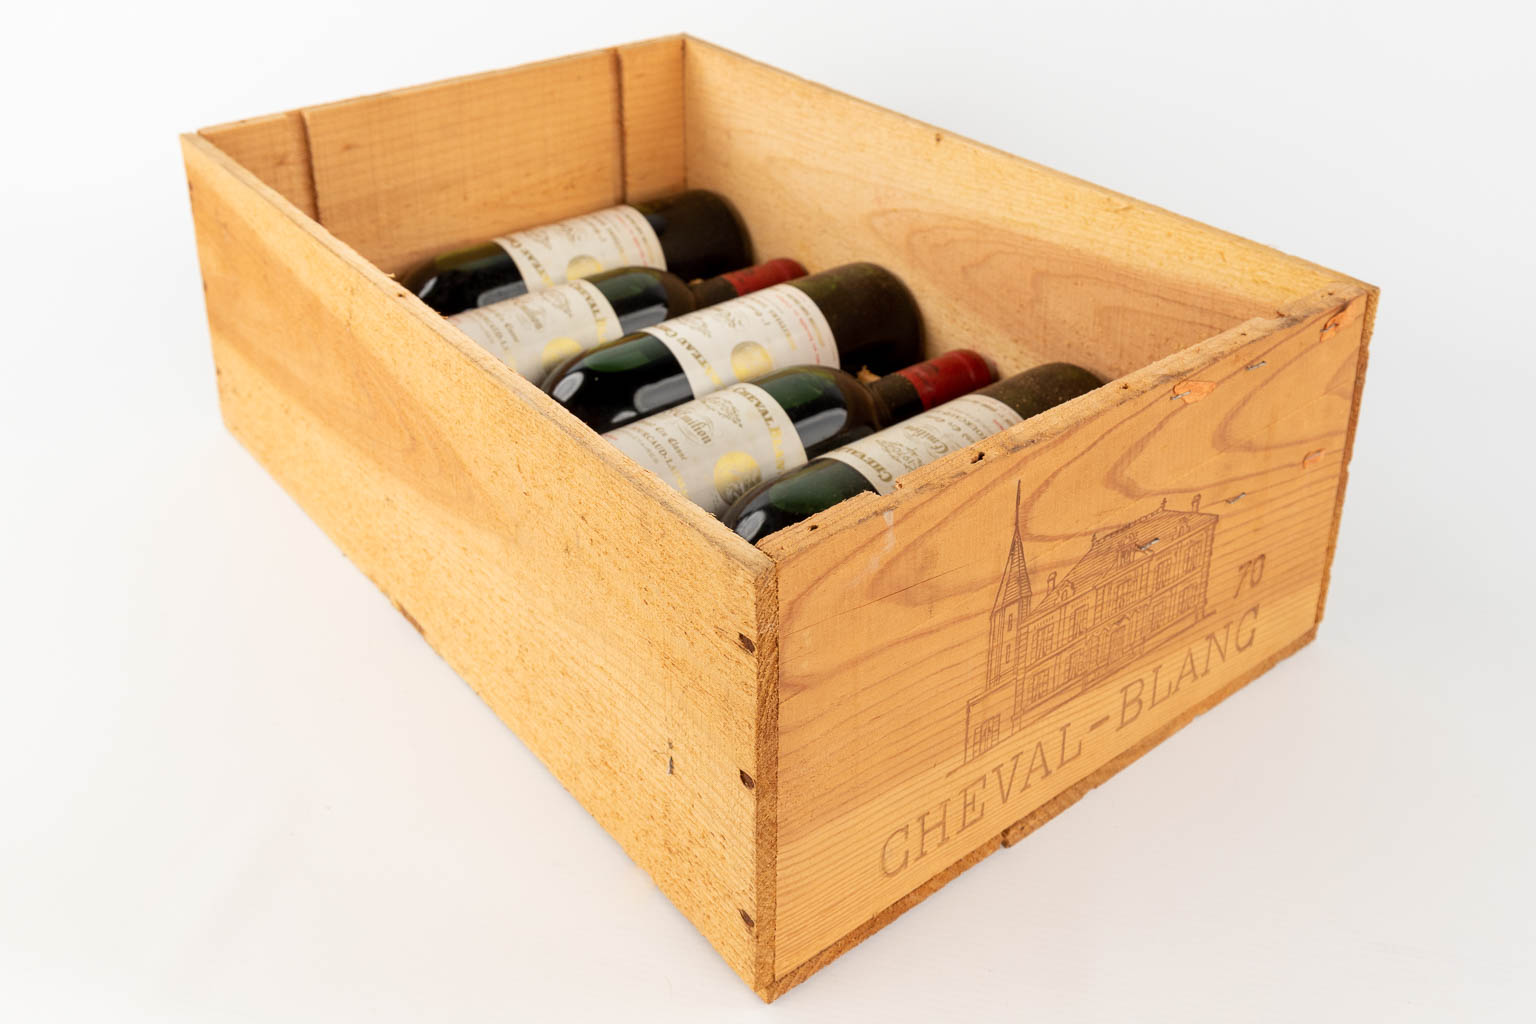 Château Cheval Blanc 1970, 5 bottles. 